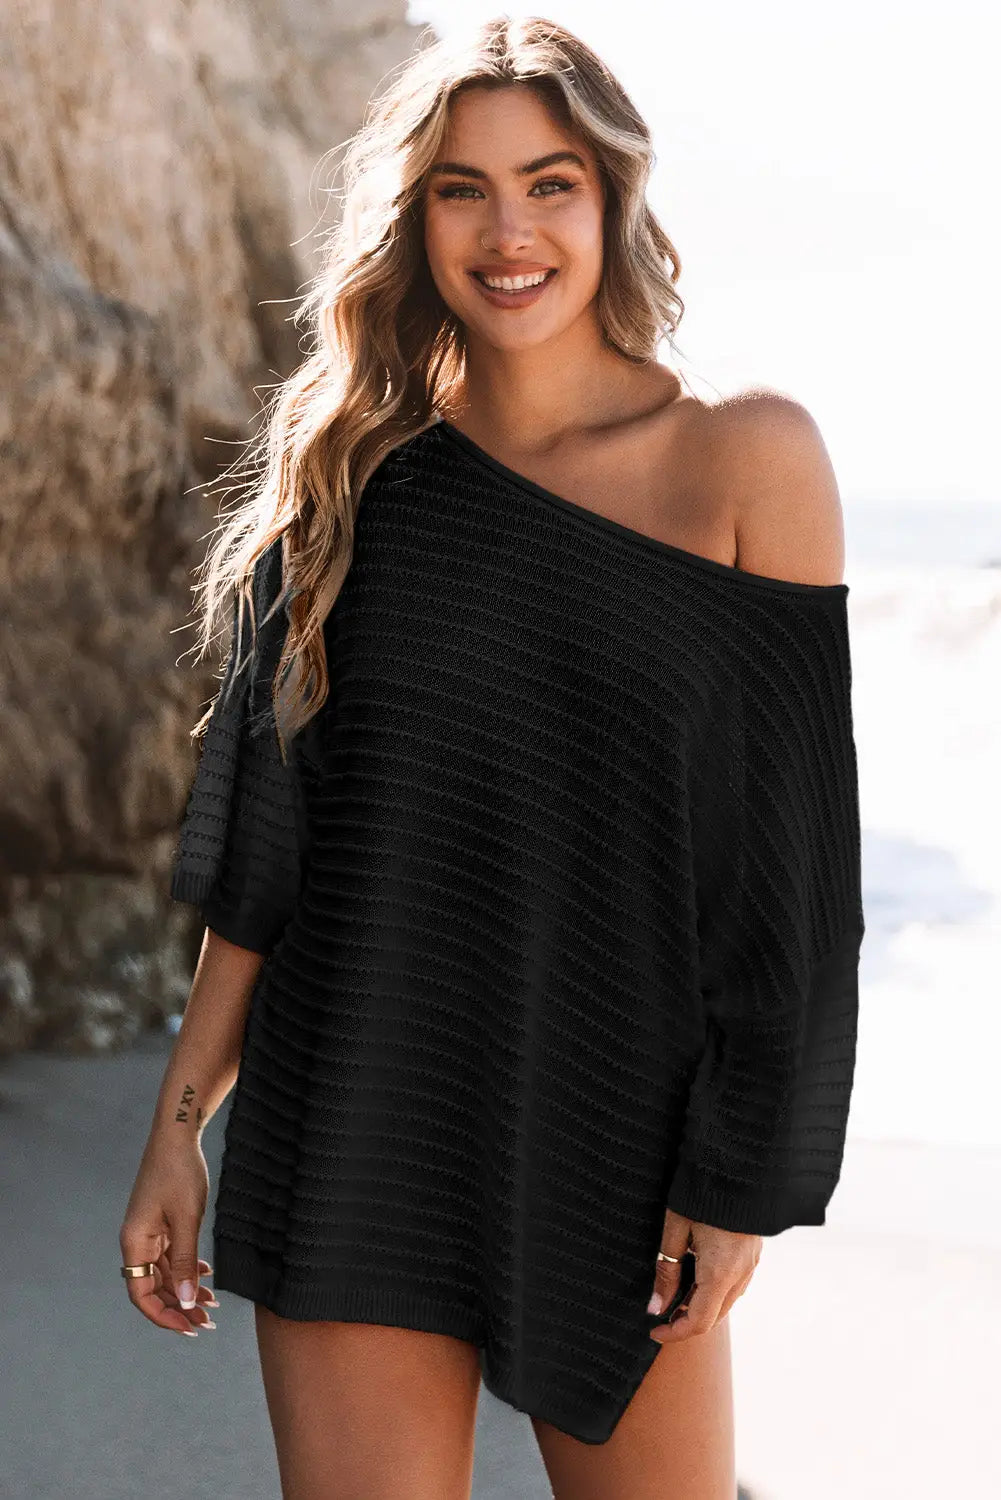 Textured knit drop shoulder tee - black / s / 55% acrylic + 45% cotton - t-shirts